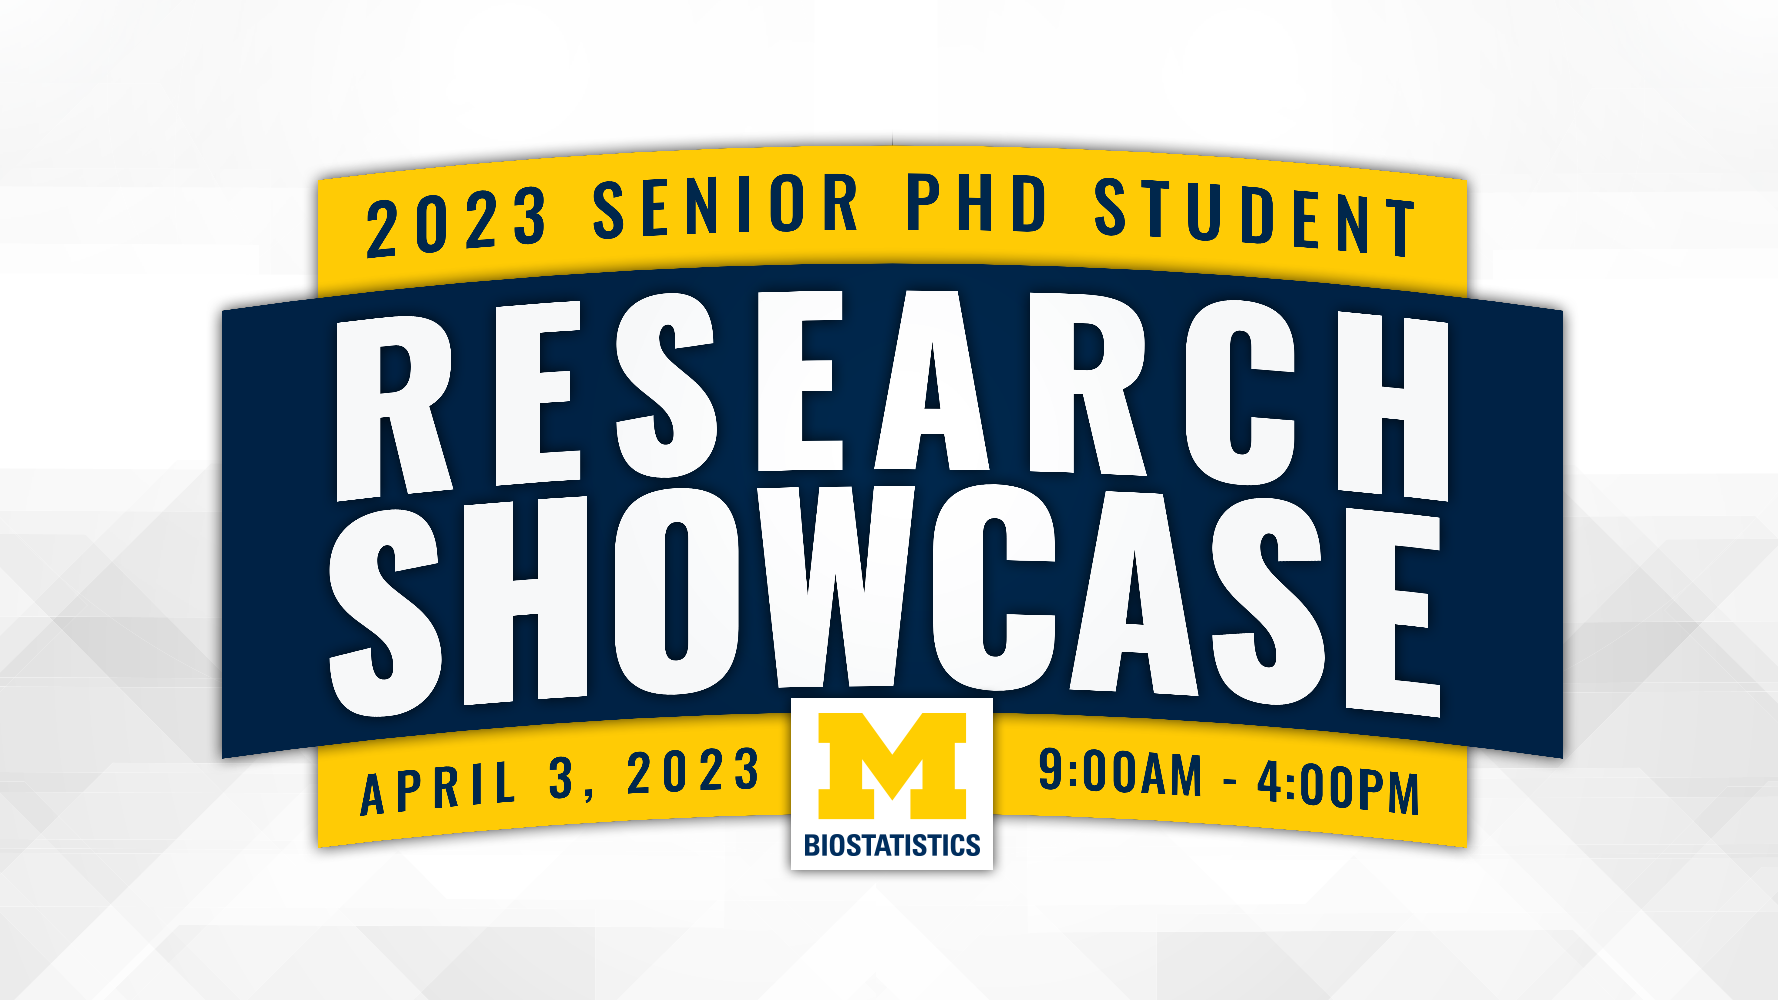 2022 Senior PhD student Research Showcase Symposium